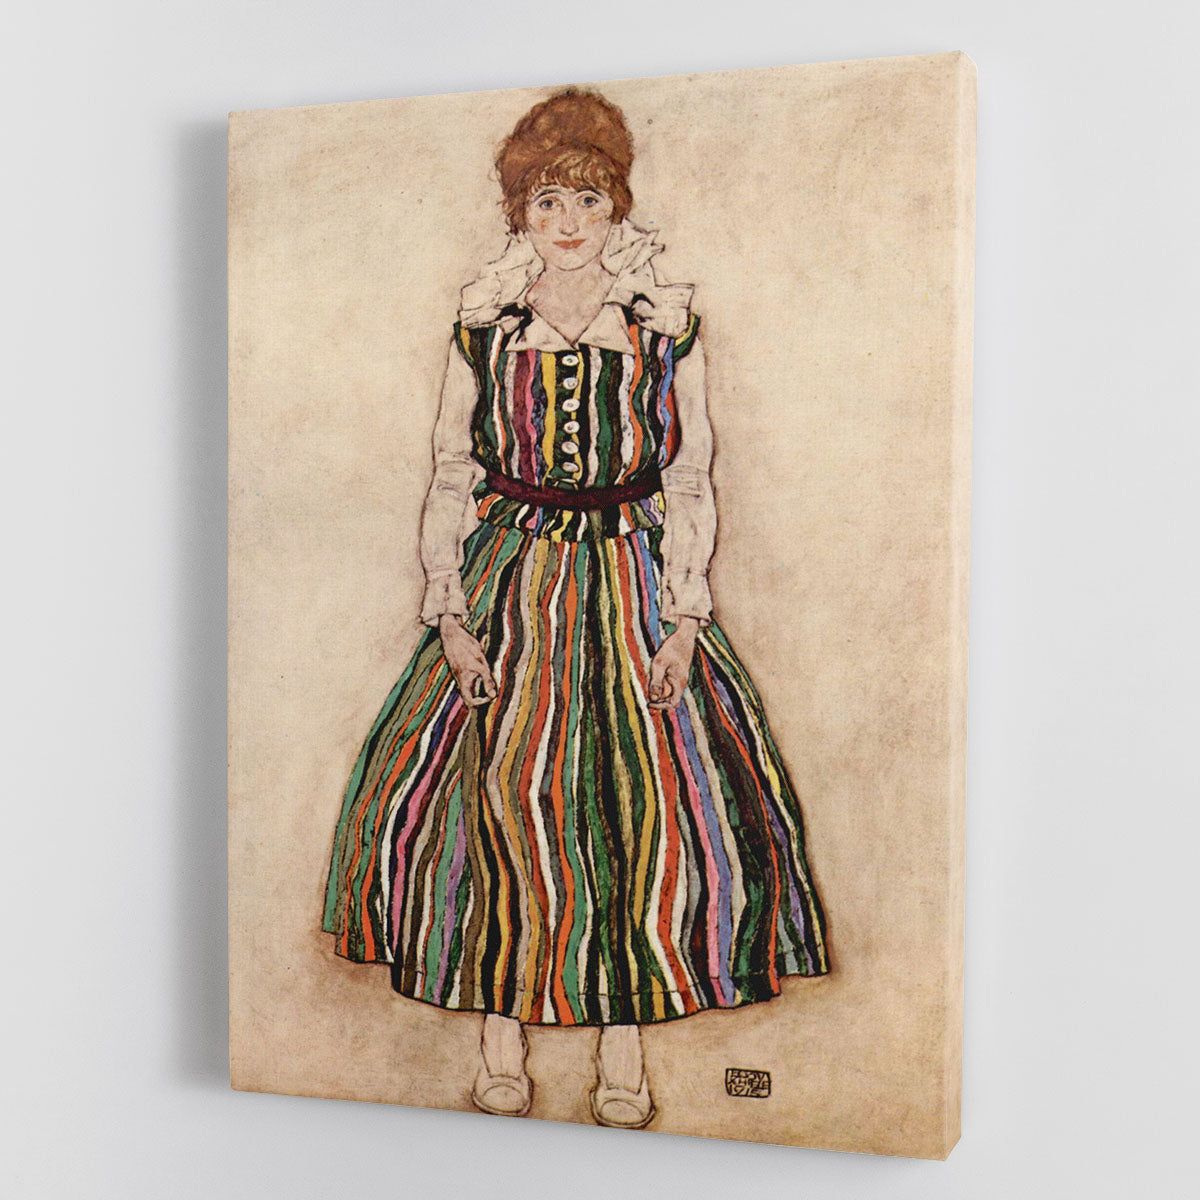 Portrait of Edith Egon Schiele in a striped dress by Egon Schiele Canvas Print or Poster - Canvas Art Rocks - 1